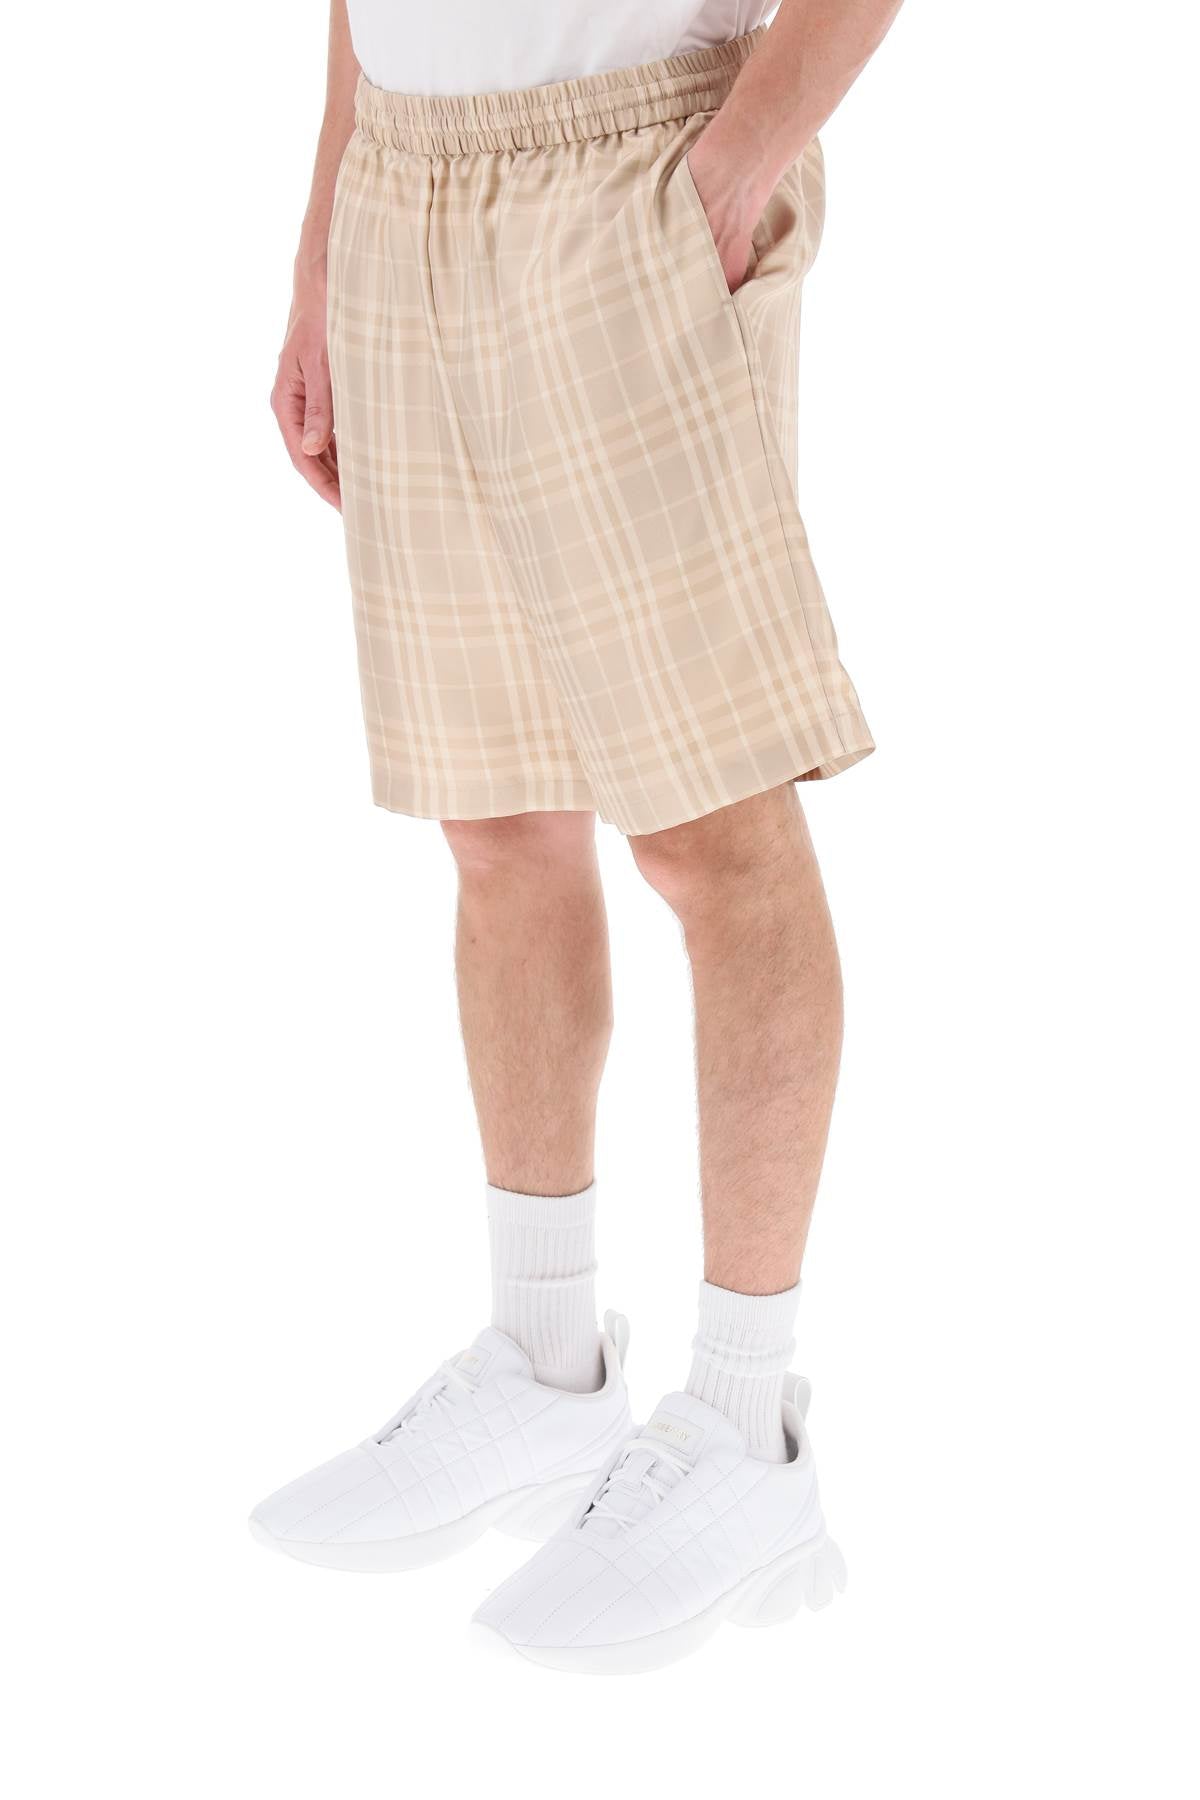 Burberry Tartan Silk Shorts (Size - L)